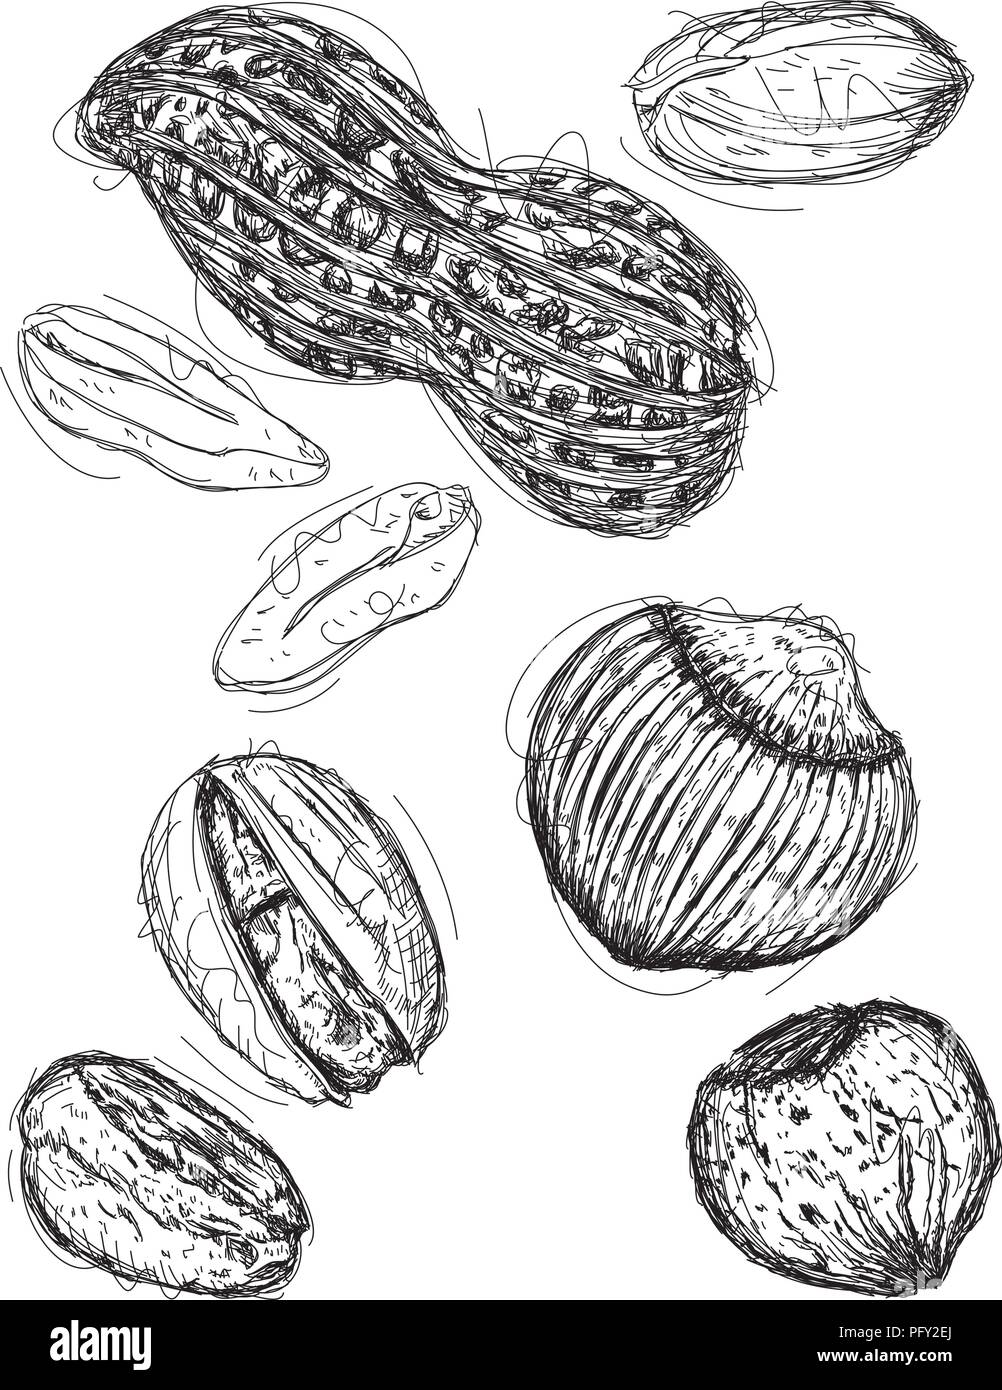 Peanut, pistachio, and chestnut sketches Stock Vector